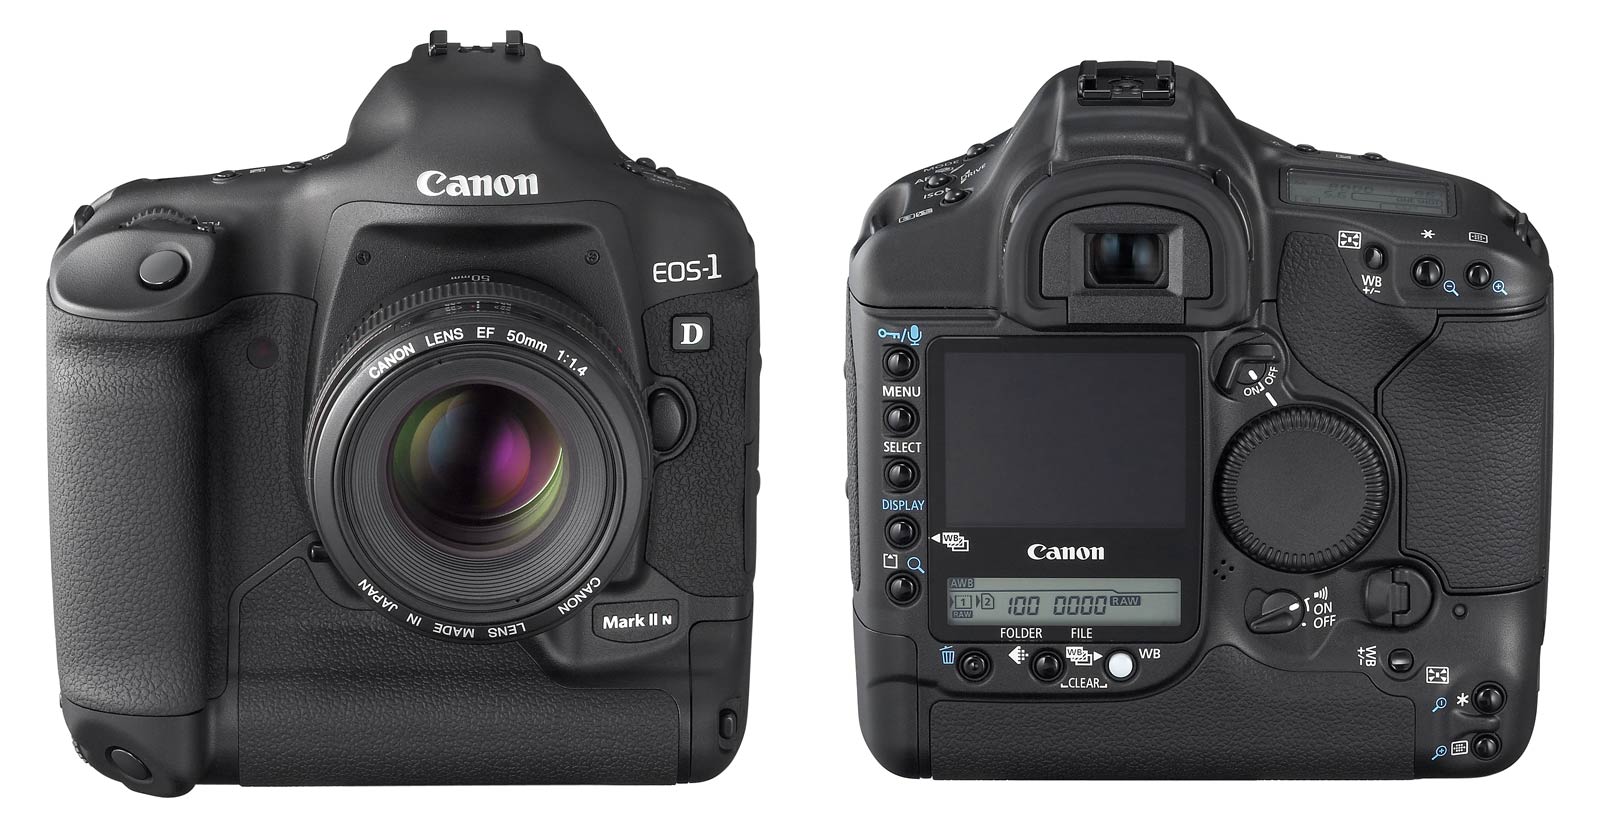 Canon eos 1d mark. Canon EOS-1d Mark II. Canon EOS 1d Mark 2n. Canon EOS 1d Mark II N. Canon EOS 1d Mark II body.